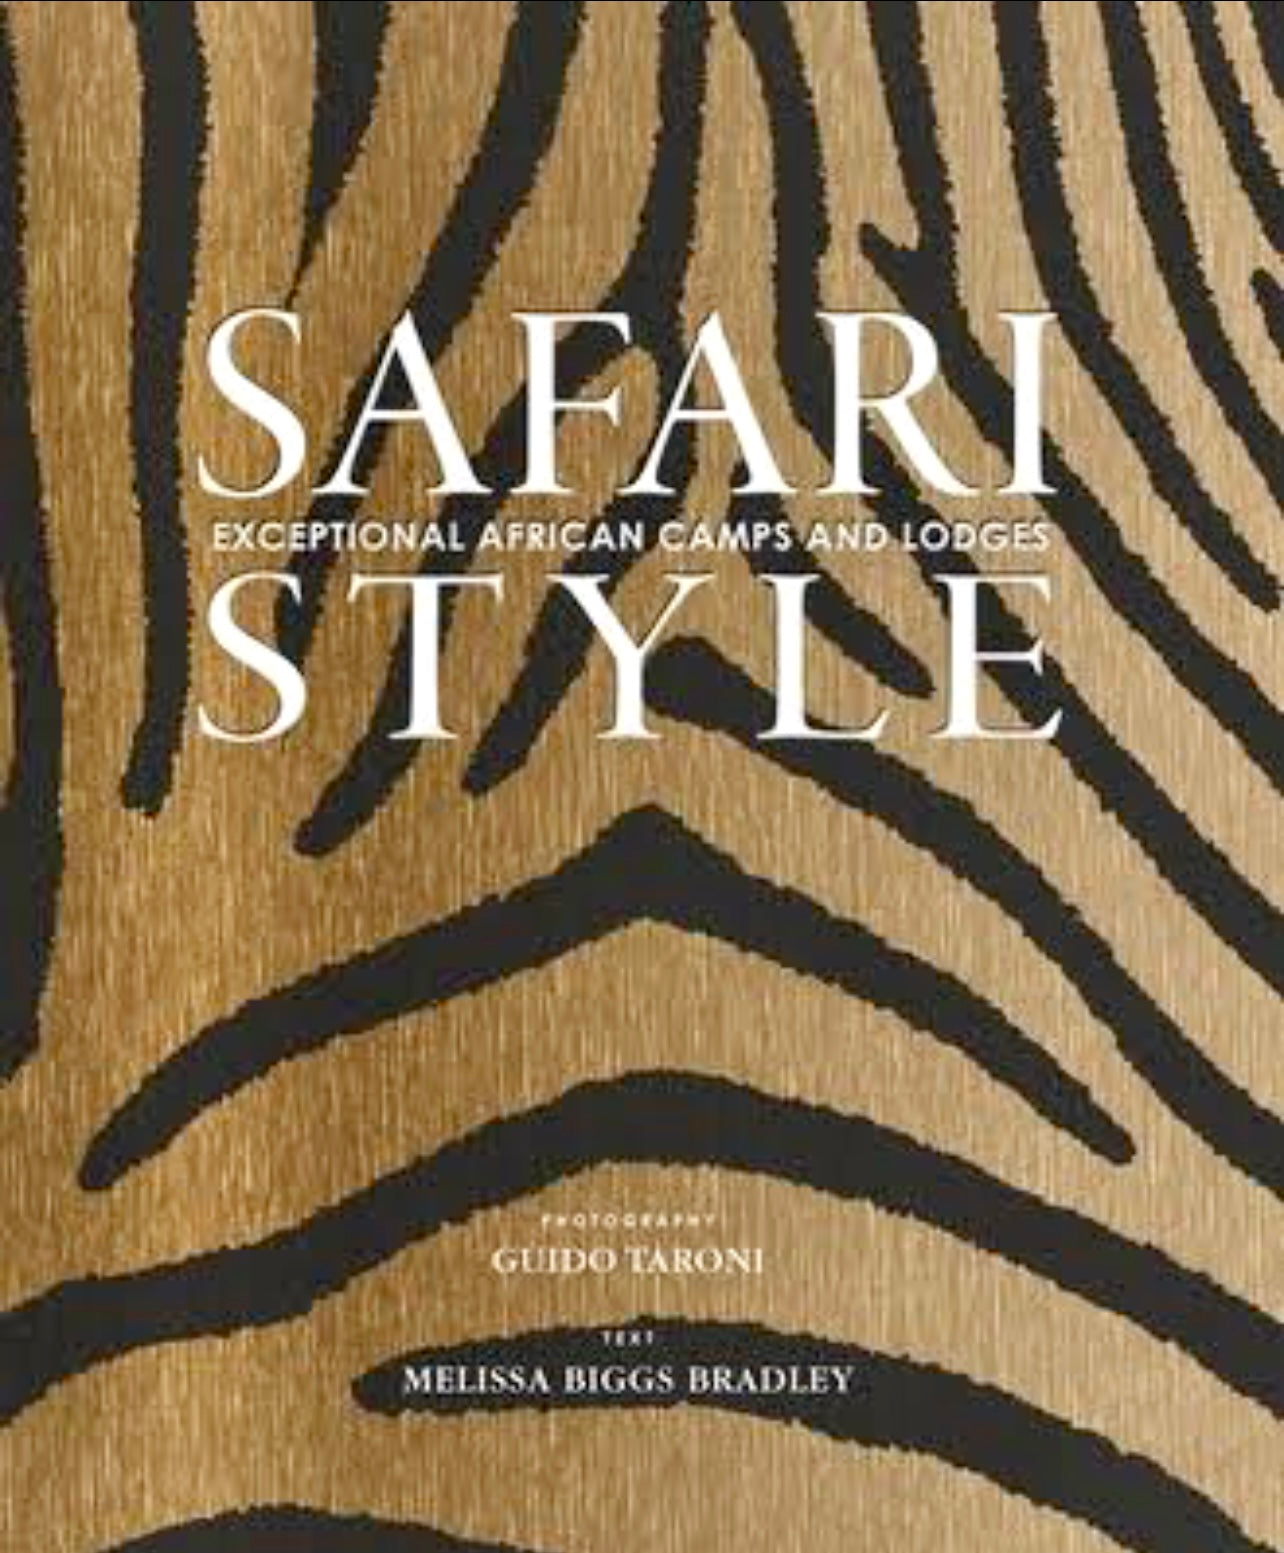 Safari Style by Melissa Biggs Bradley ~ Guido Taroni, Photographer